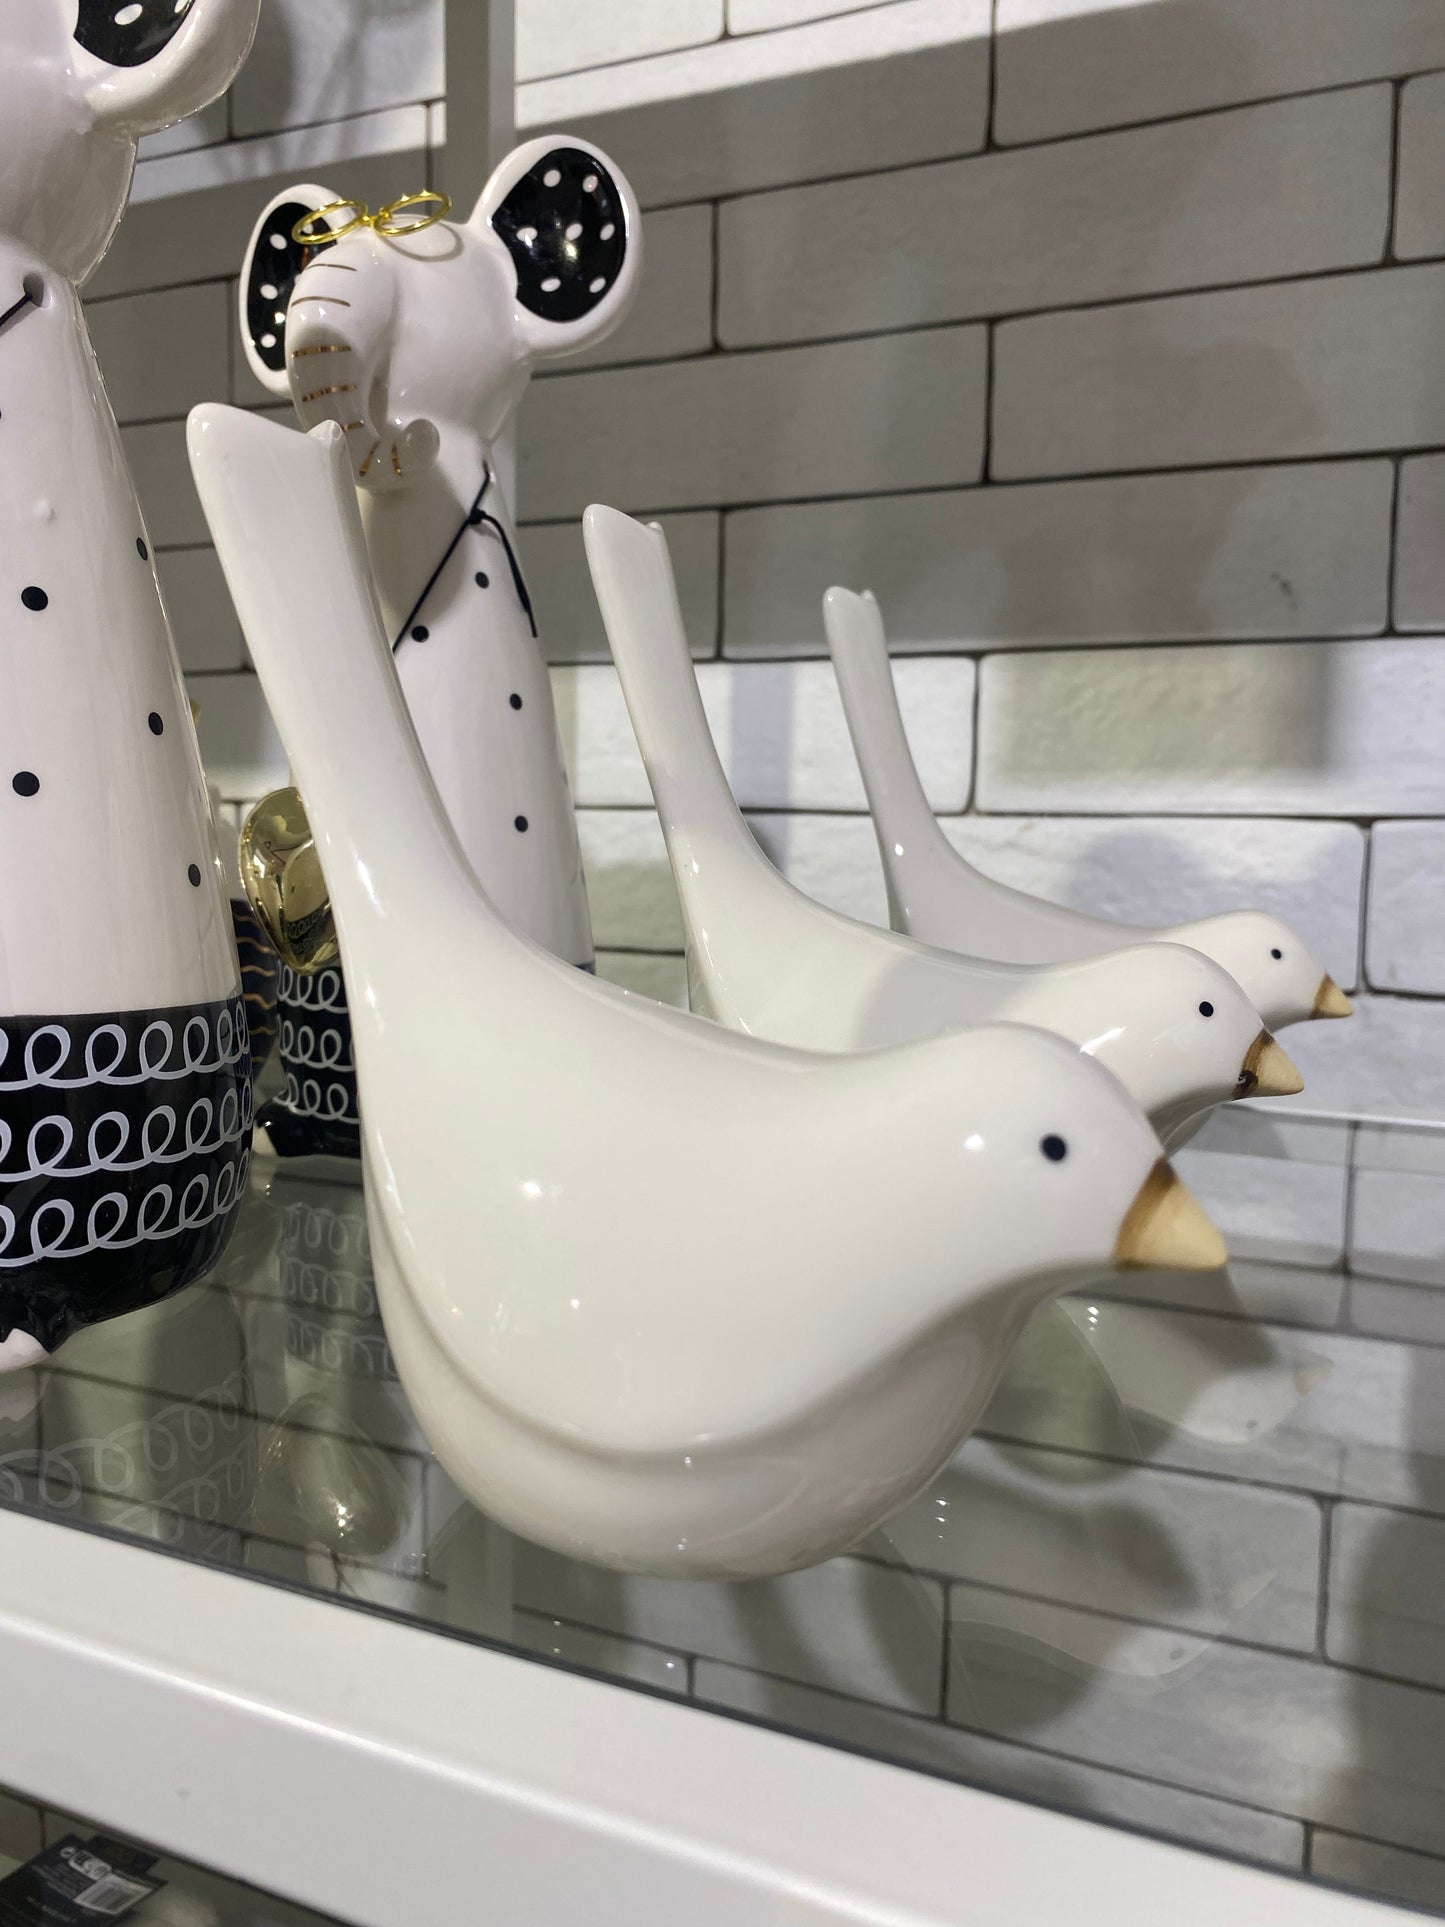 Porcelain decor - birds, 2 types